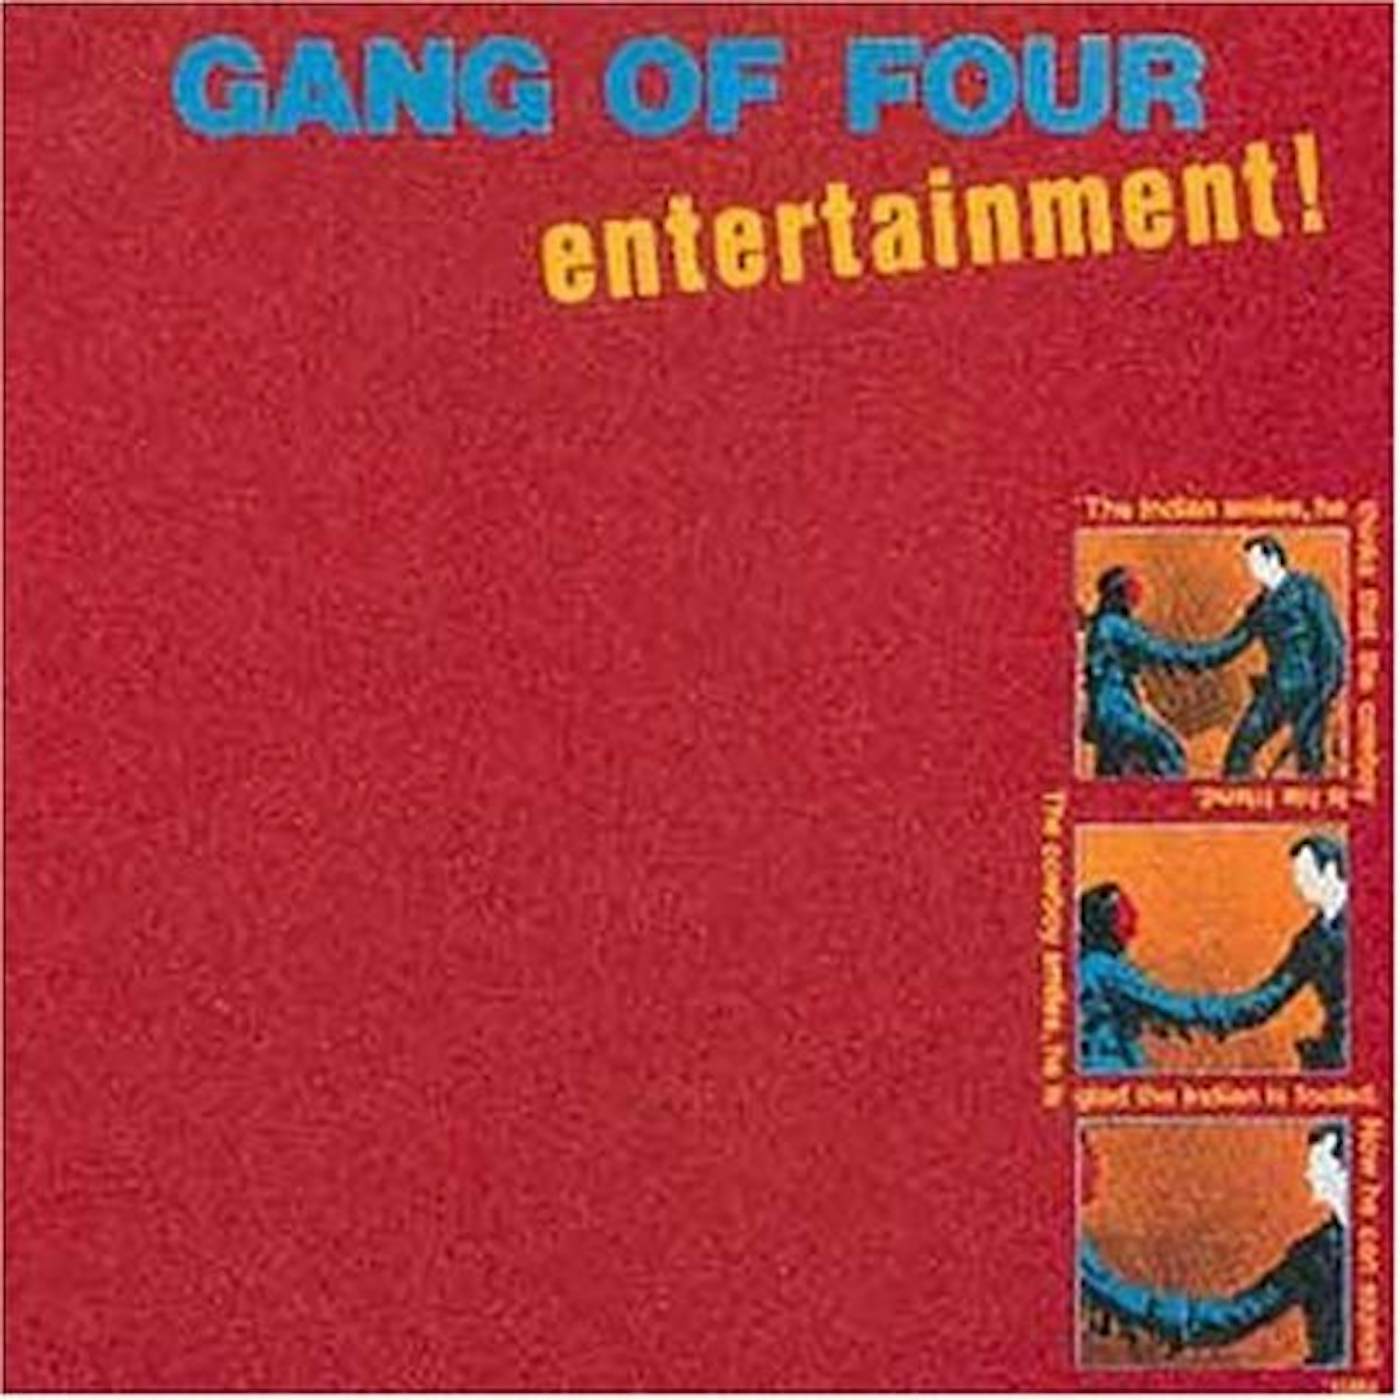 Gang Of Four ENTERTAINMENT!-CD CD